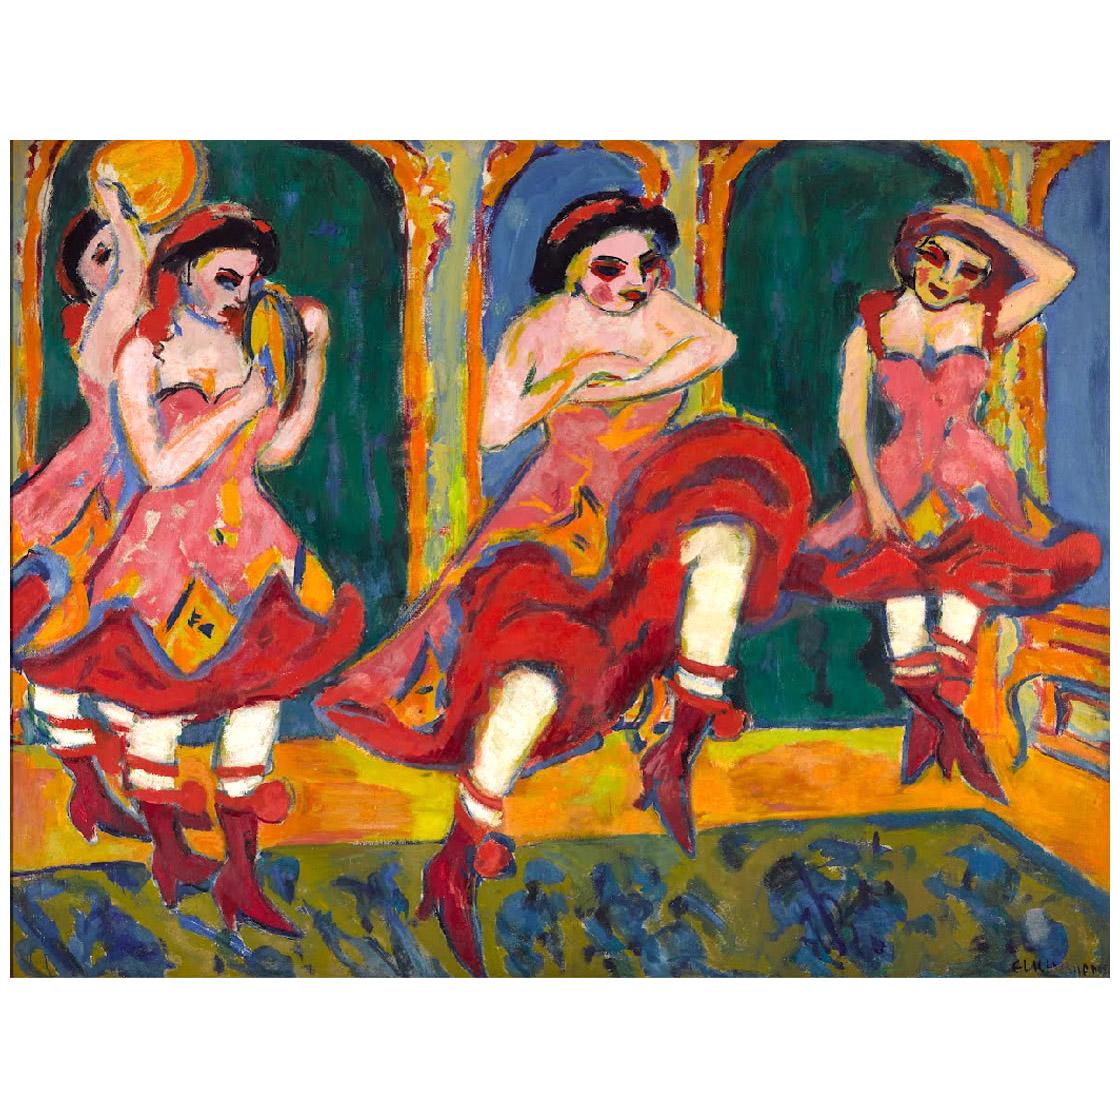 Ernst Ludwig Kirchner. Czardas Dancers. 1908. Gemeentemuseum Den Haag